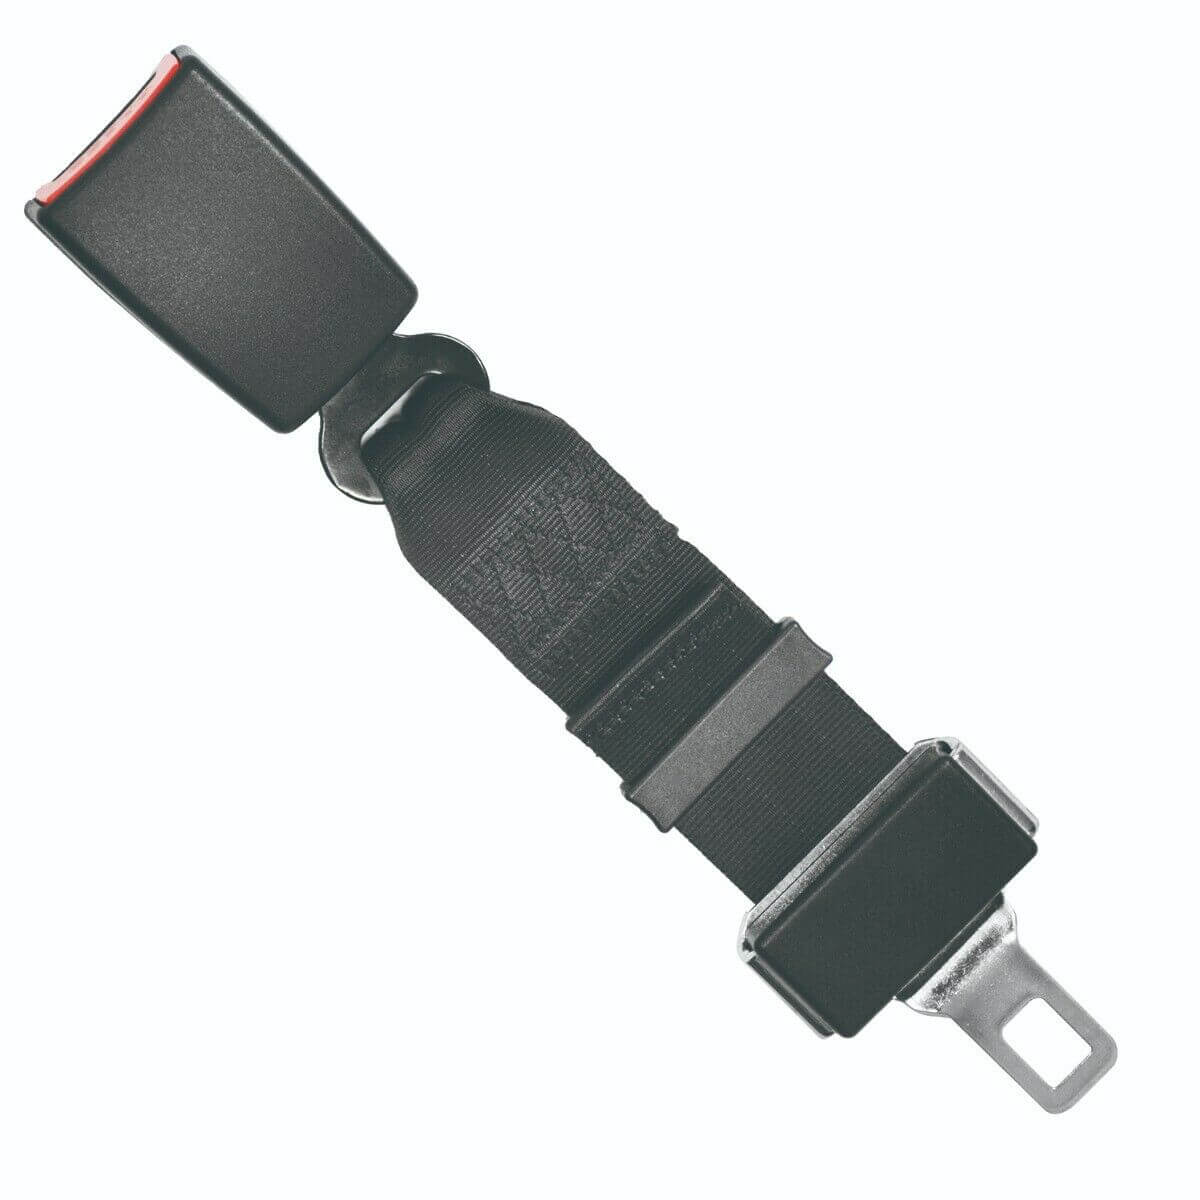 2x Heavy Duty Car Vehicle Seat Belt Extension Extender Strap Black Safety Buckle